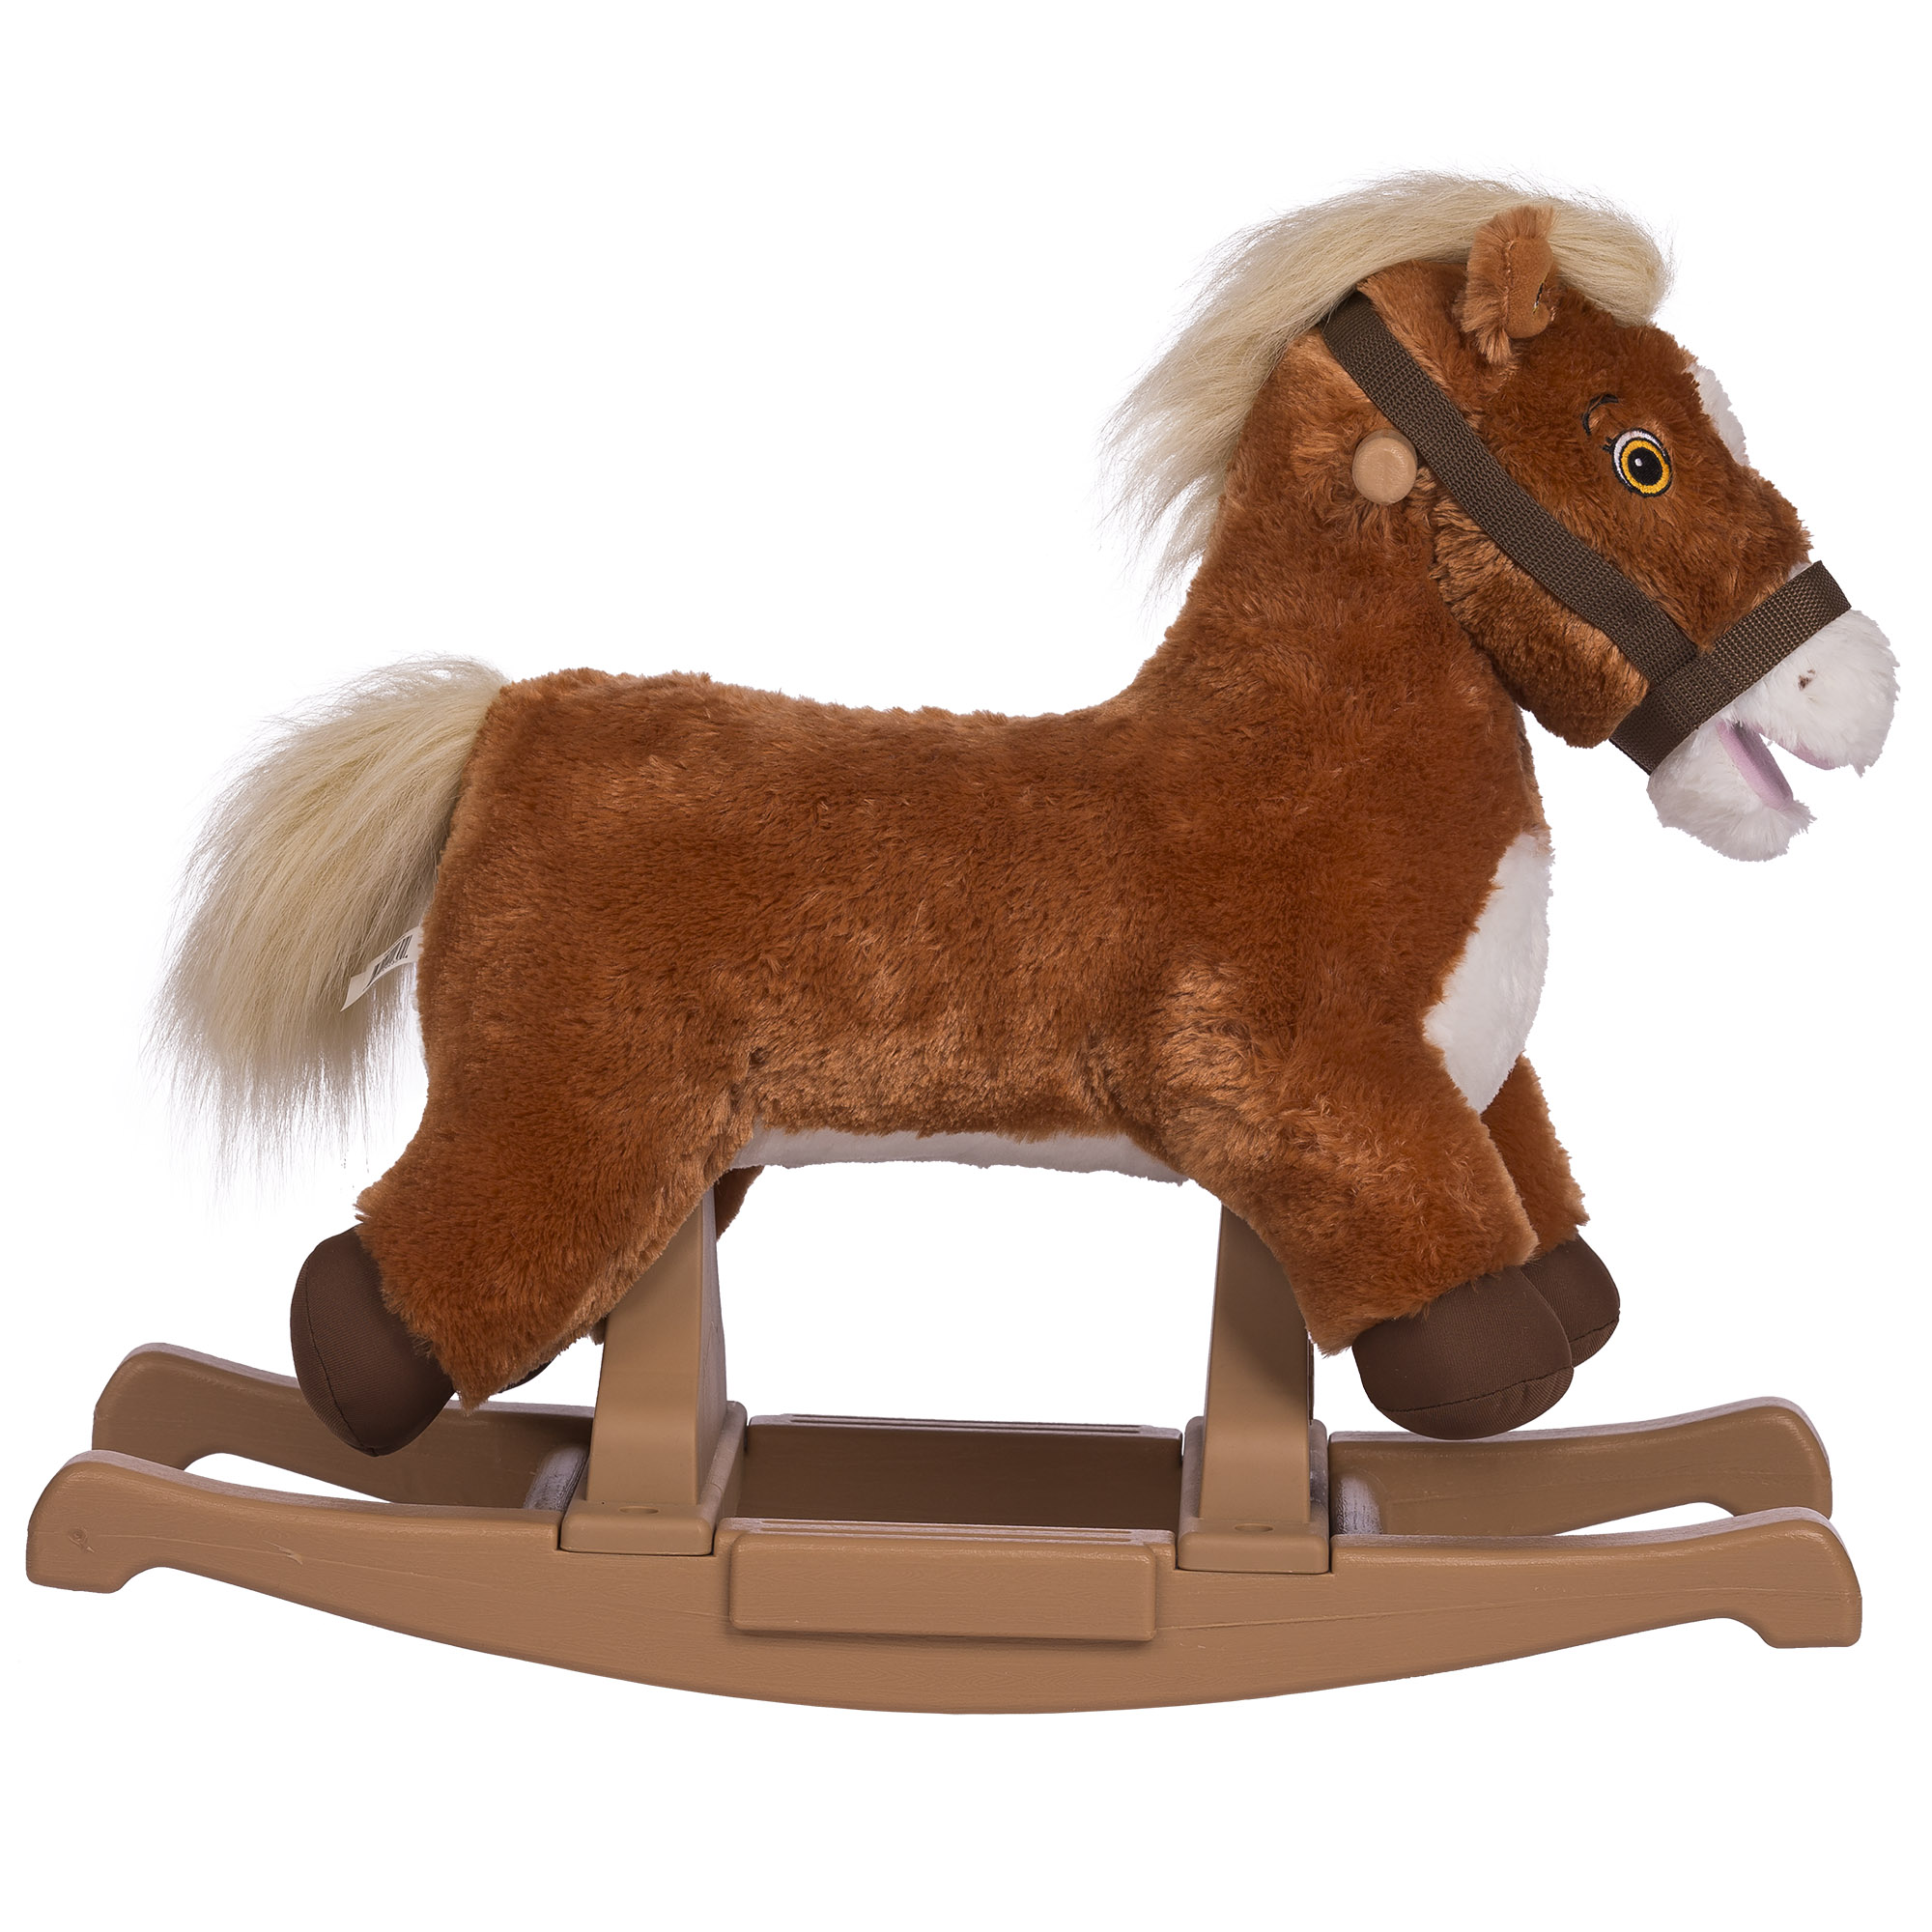 Rockin' Rider Pony Rocker Animated Plush Rocking Horse, Brown - image 4 of 6